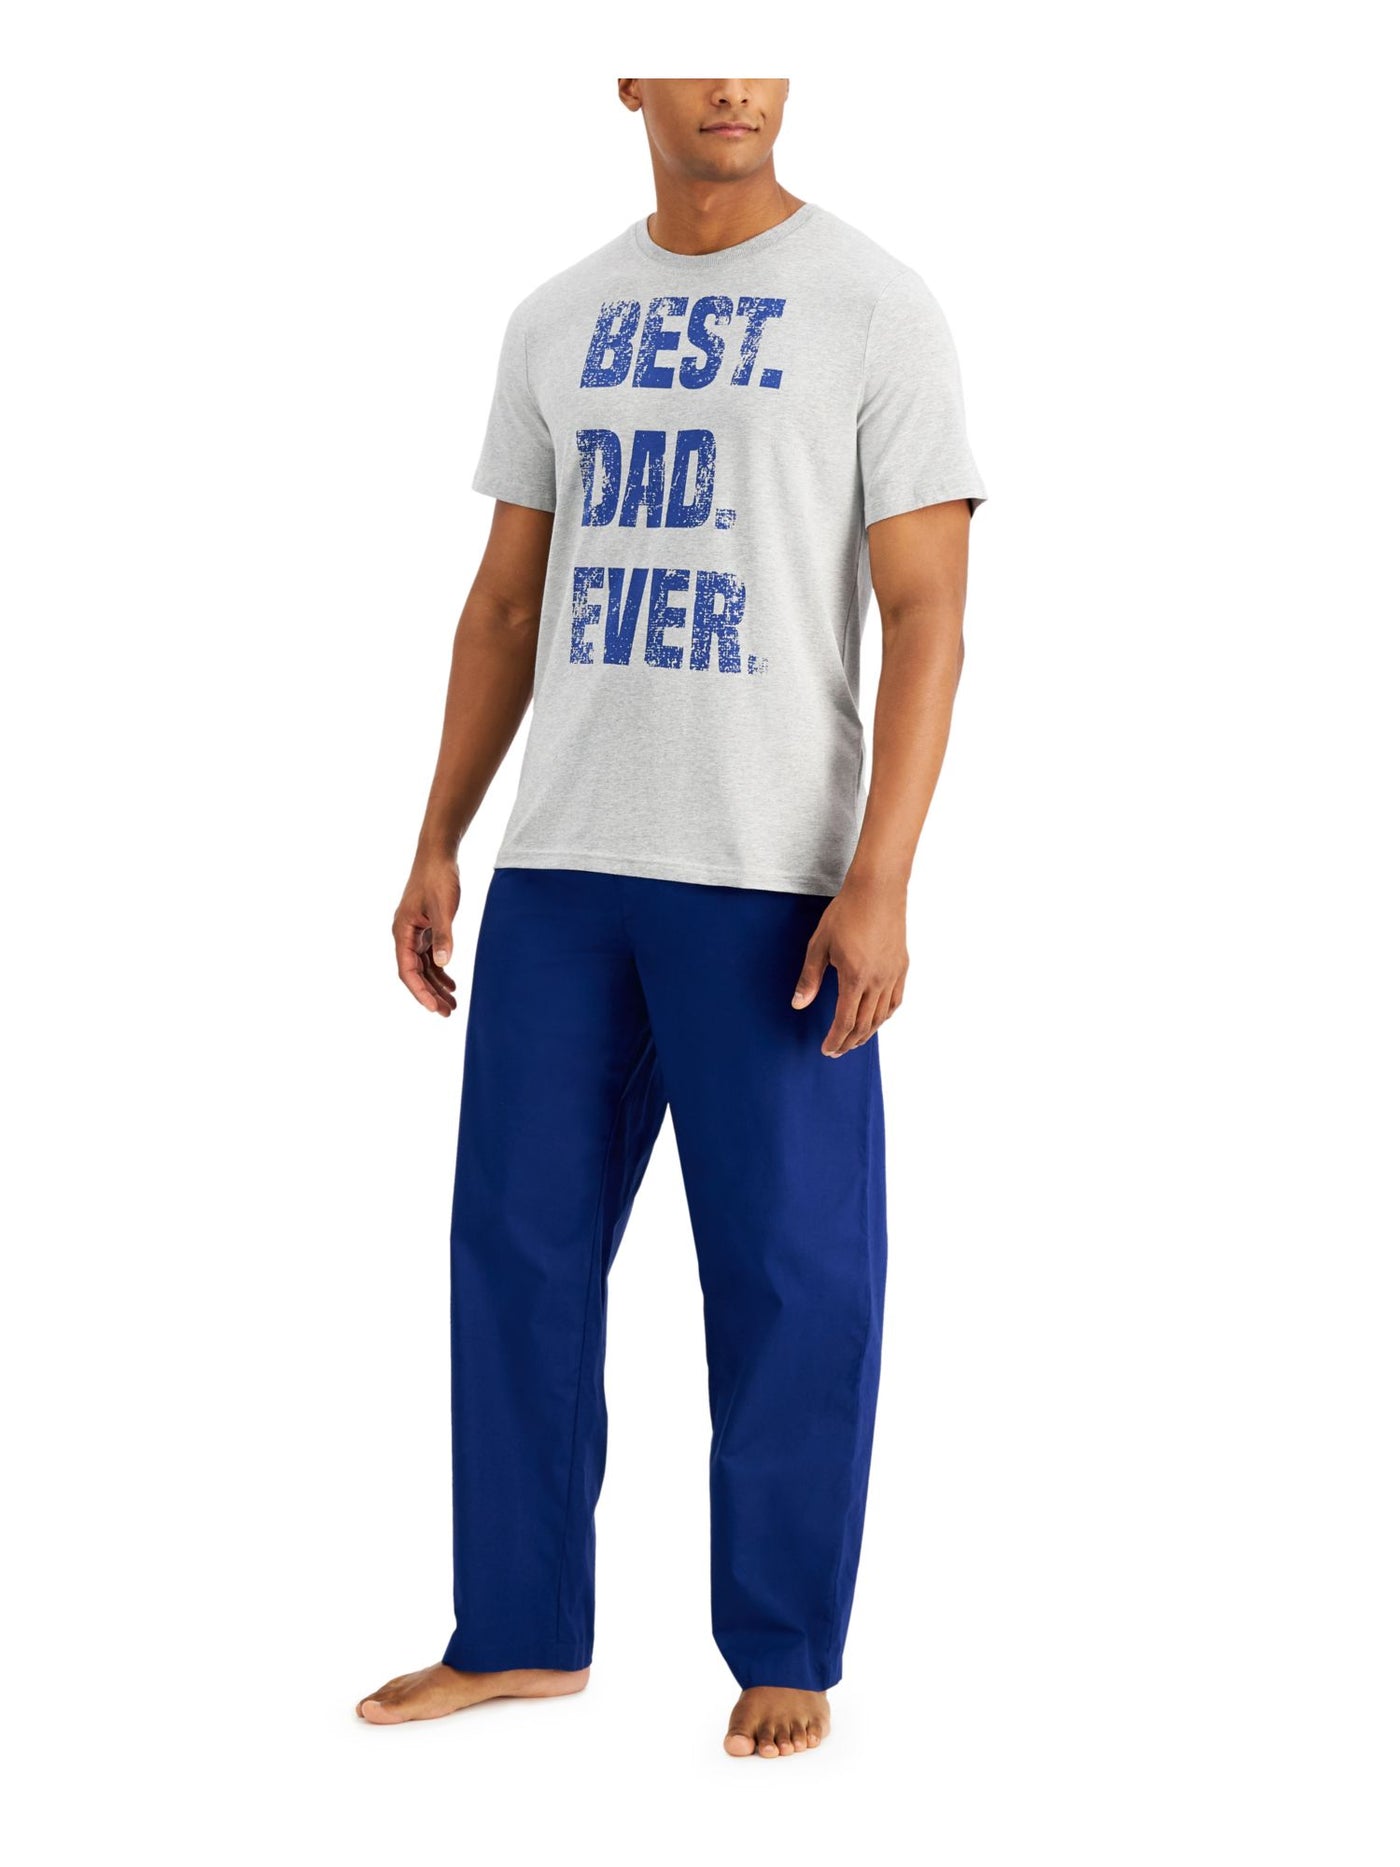 CLUBROOM Mens Best Dad Ever Gray Graphic Drawstring Short Sleeve T-Shirt Top Straight leg Pants Pajamas L